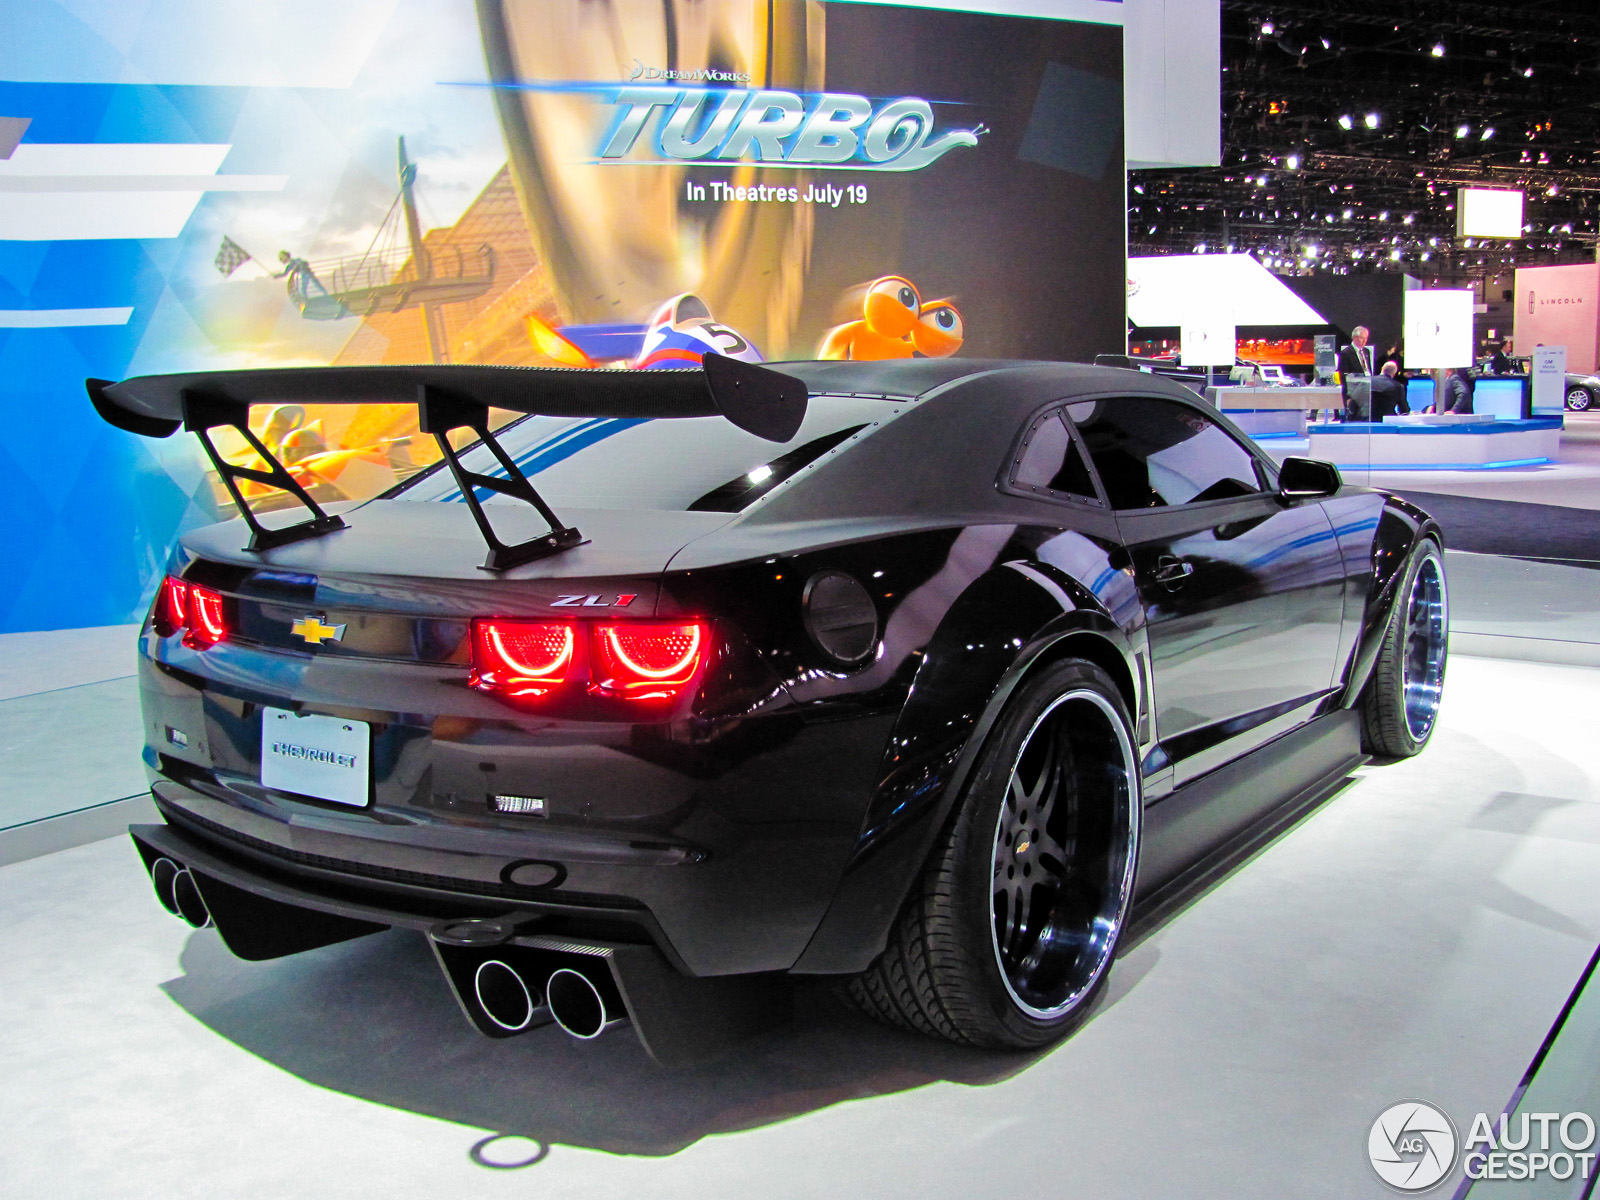 Chicago Motor Show 2013: Chevrolet "Turbo" Camaro Coupe